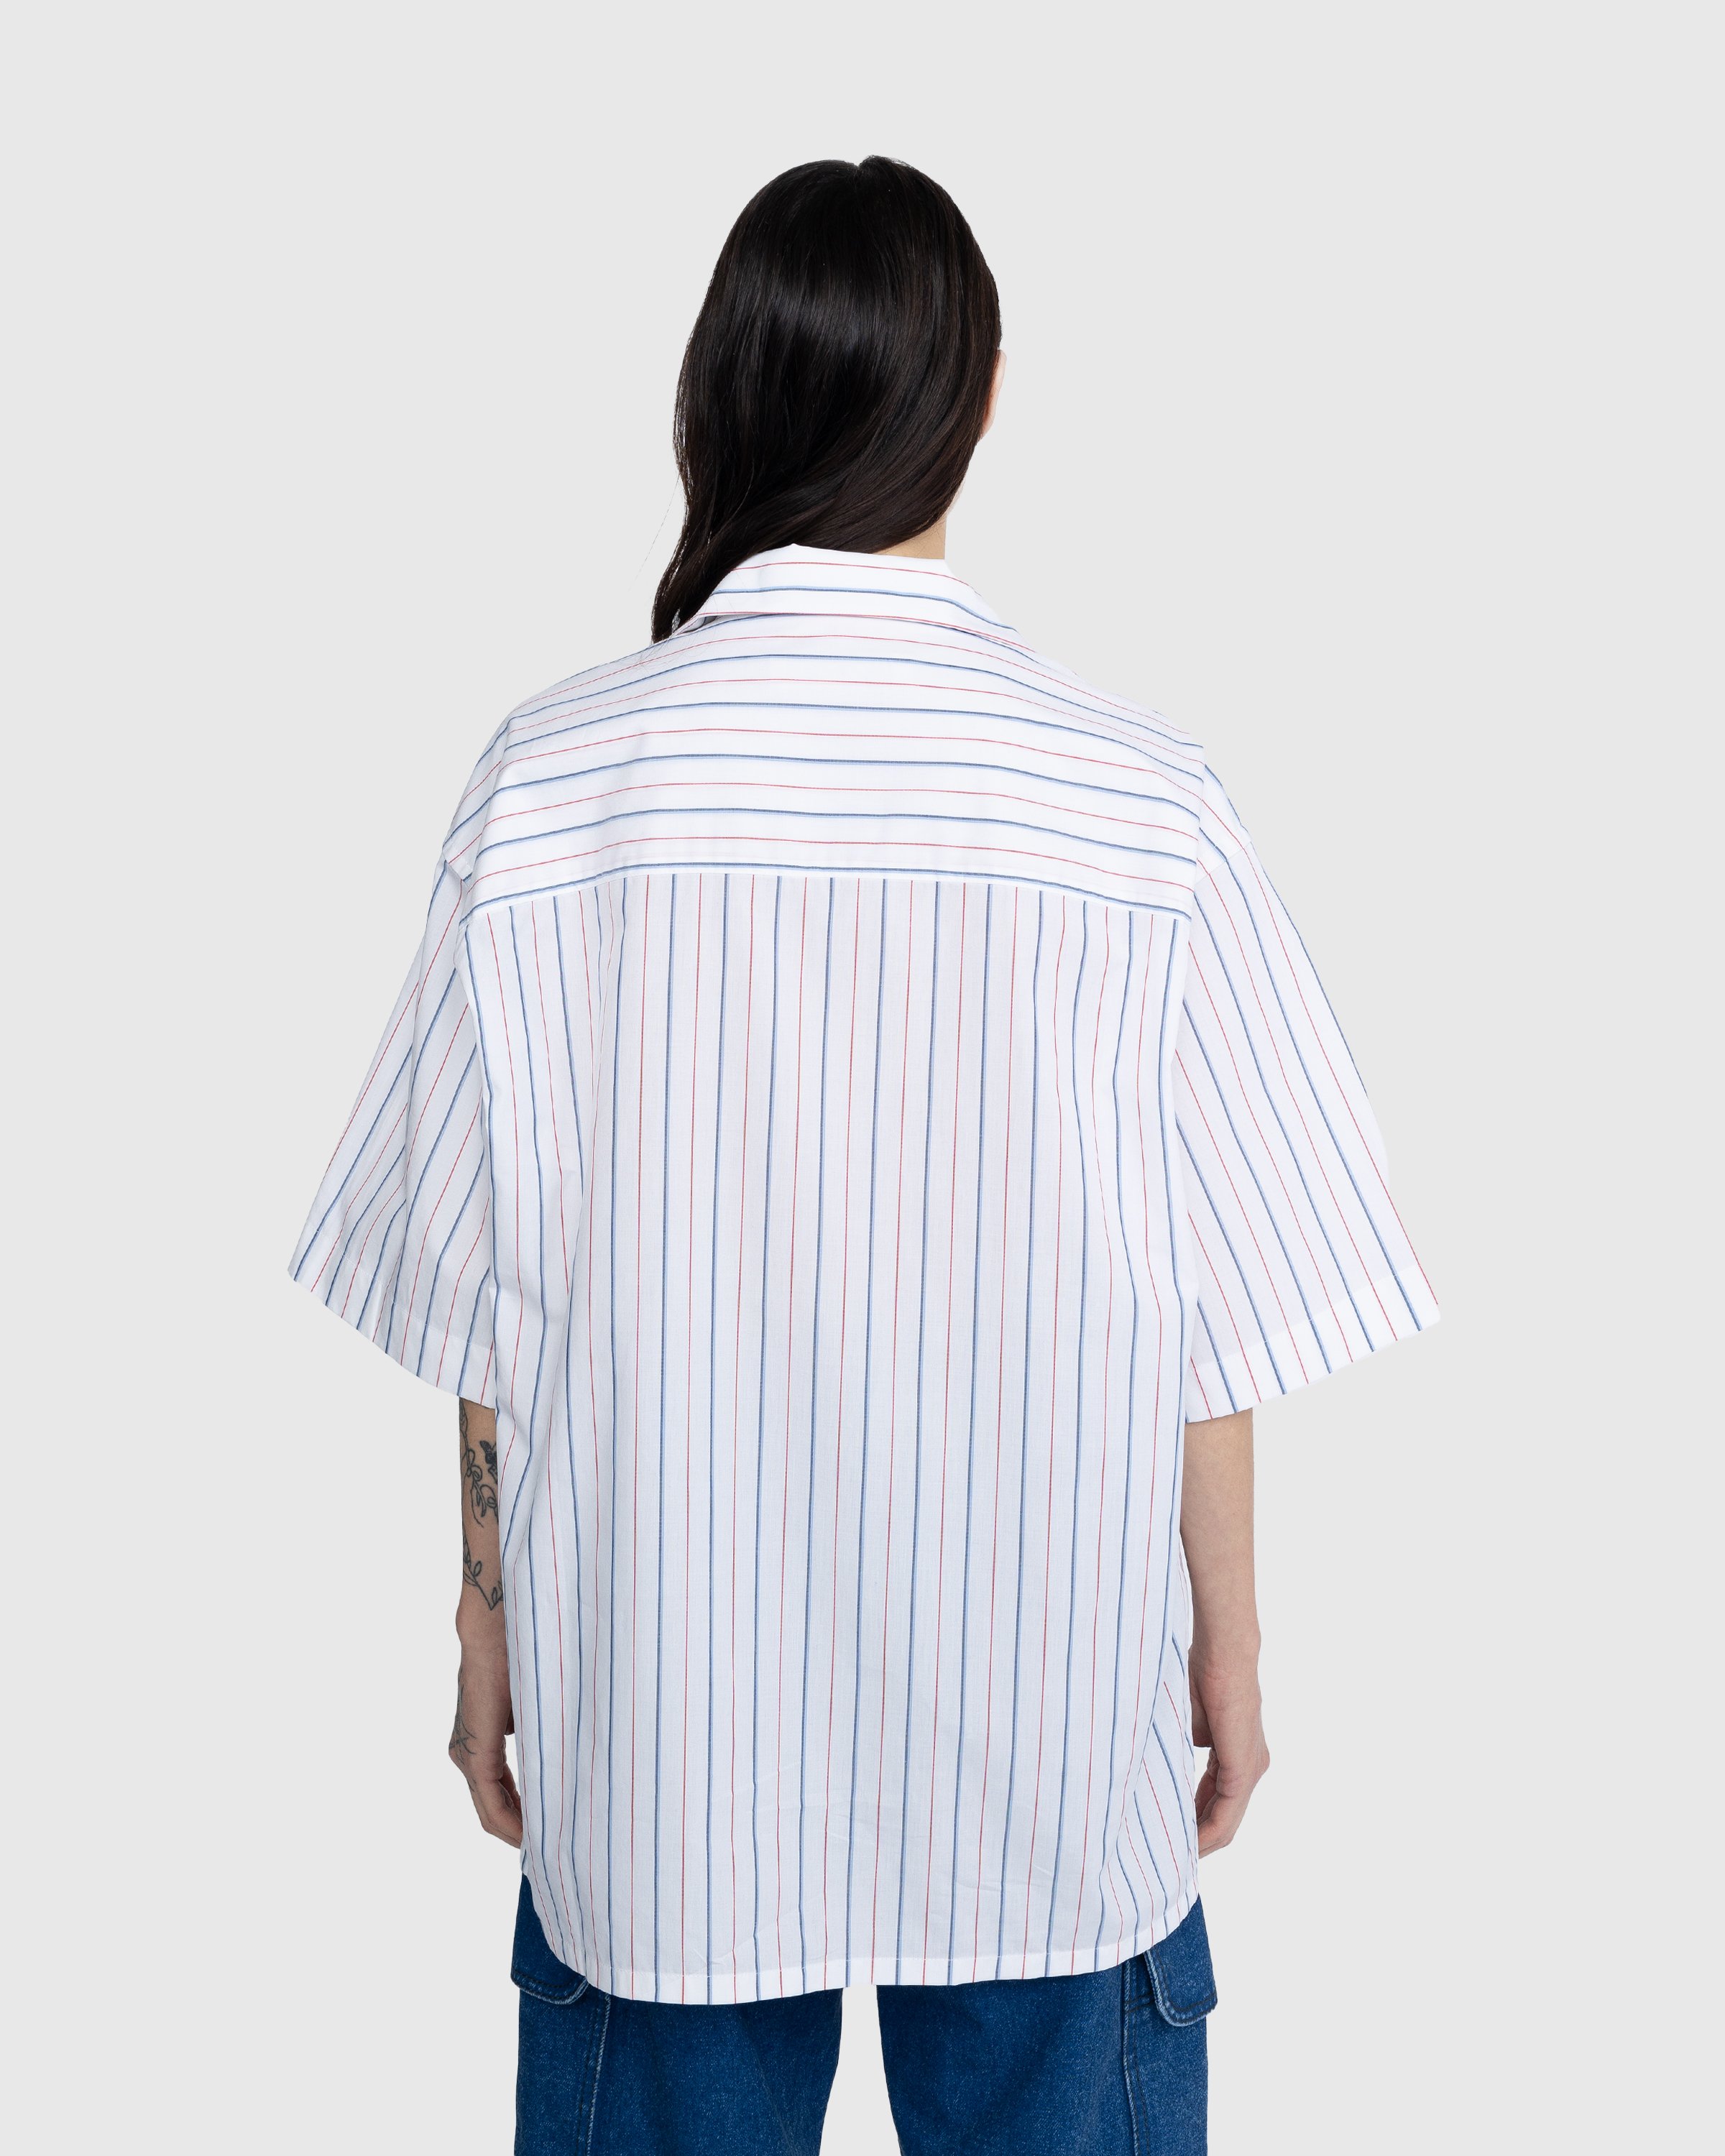 Marni - Striped Button-Up Shirt White - Clothing - White - Image 3